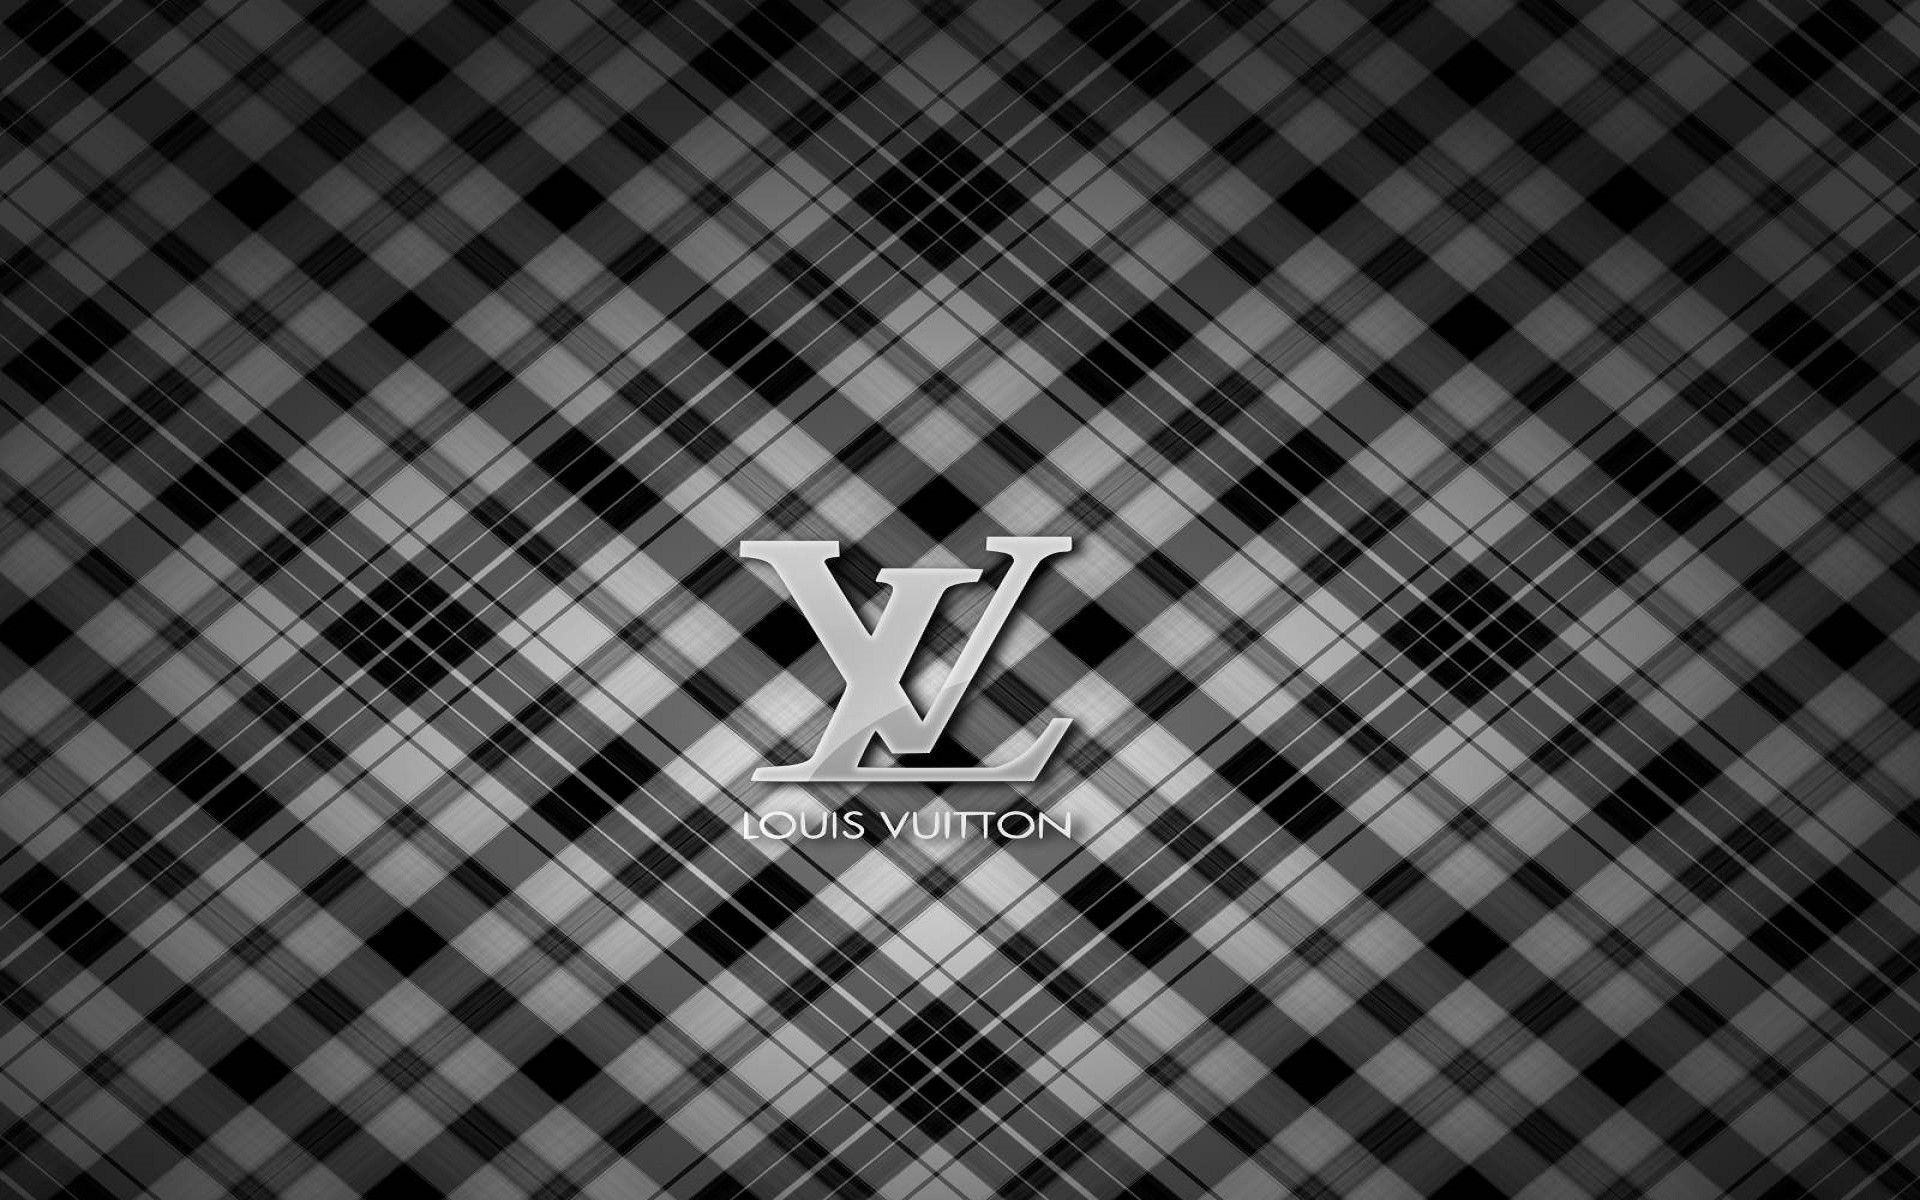 Louis Vuitton Wallpaper Free download